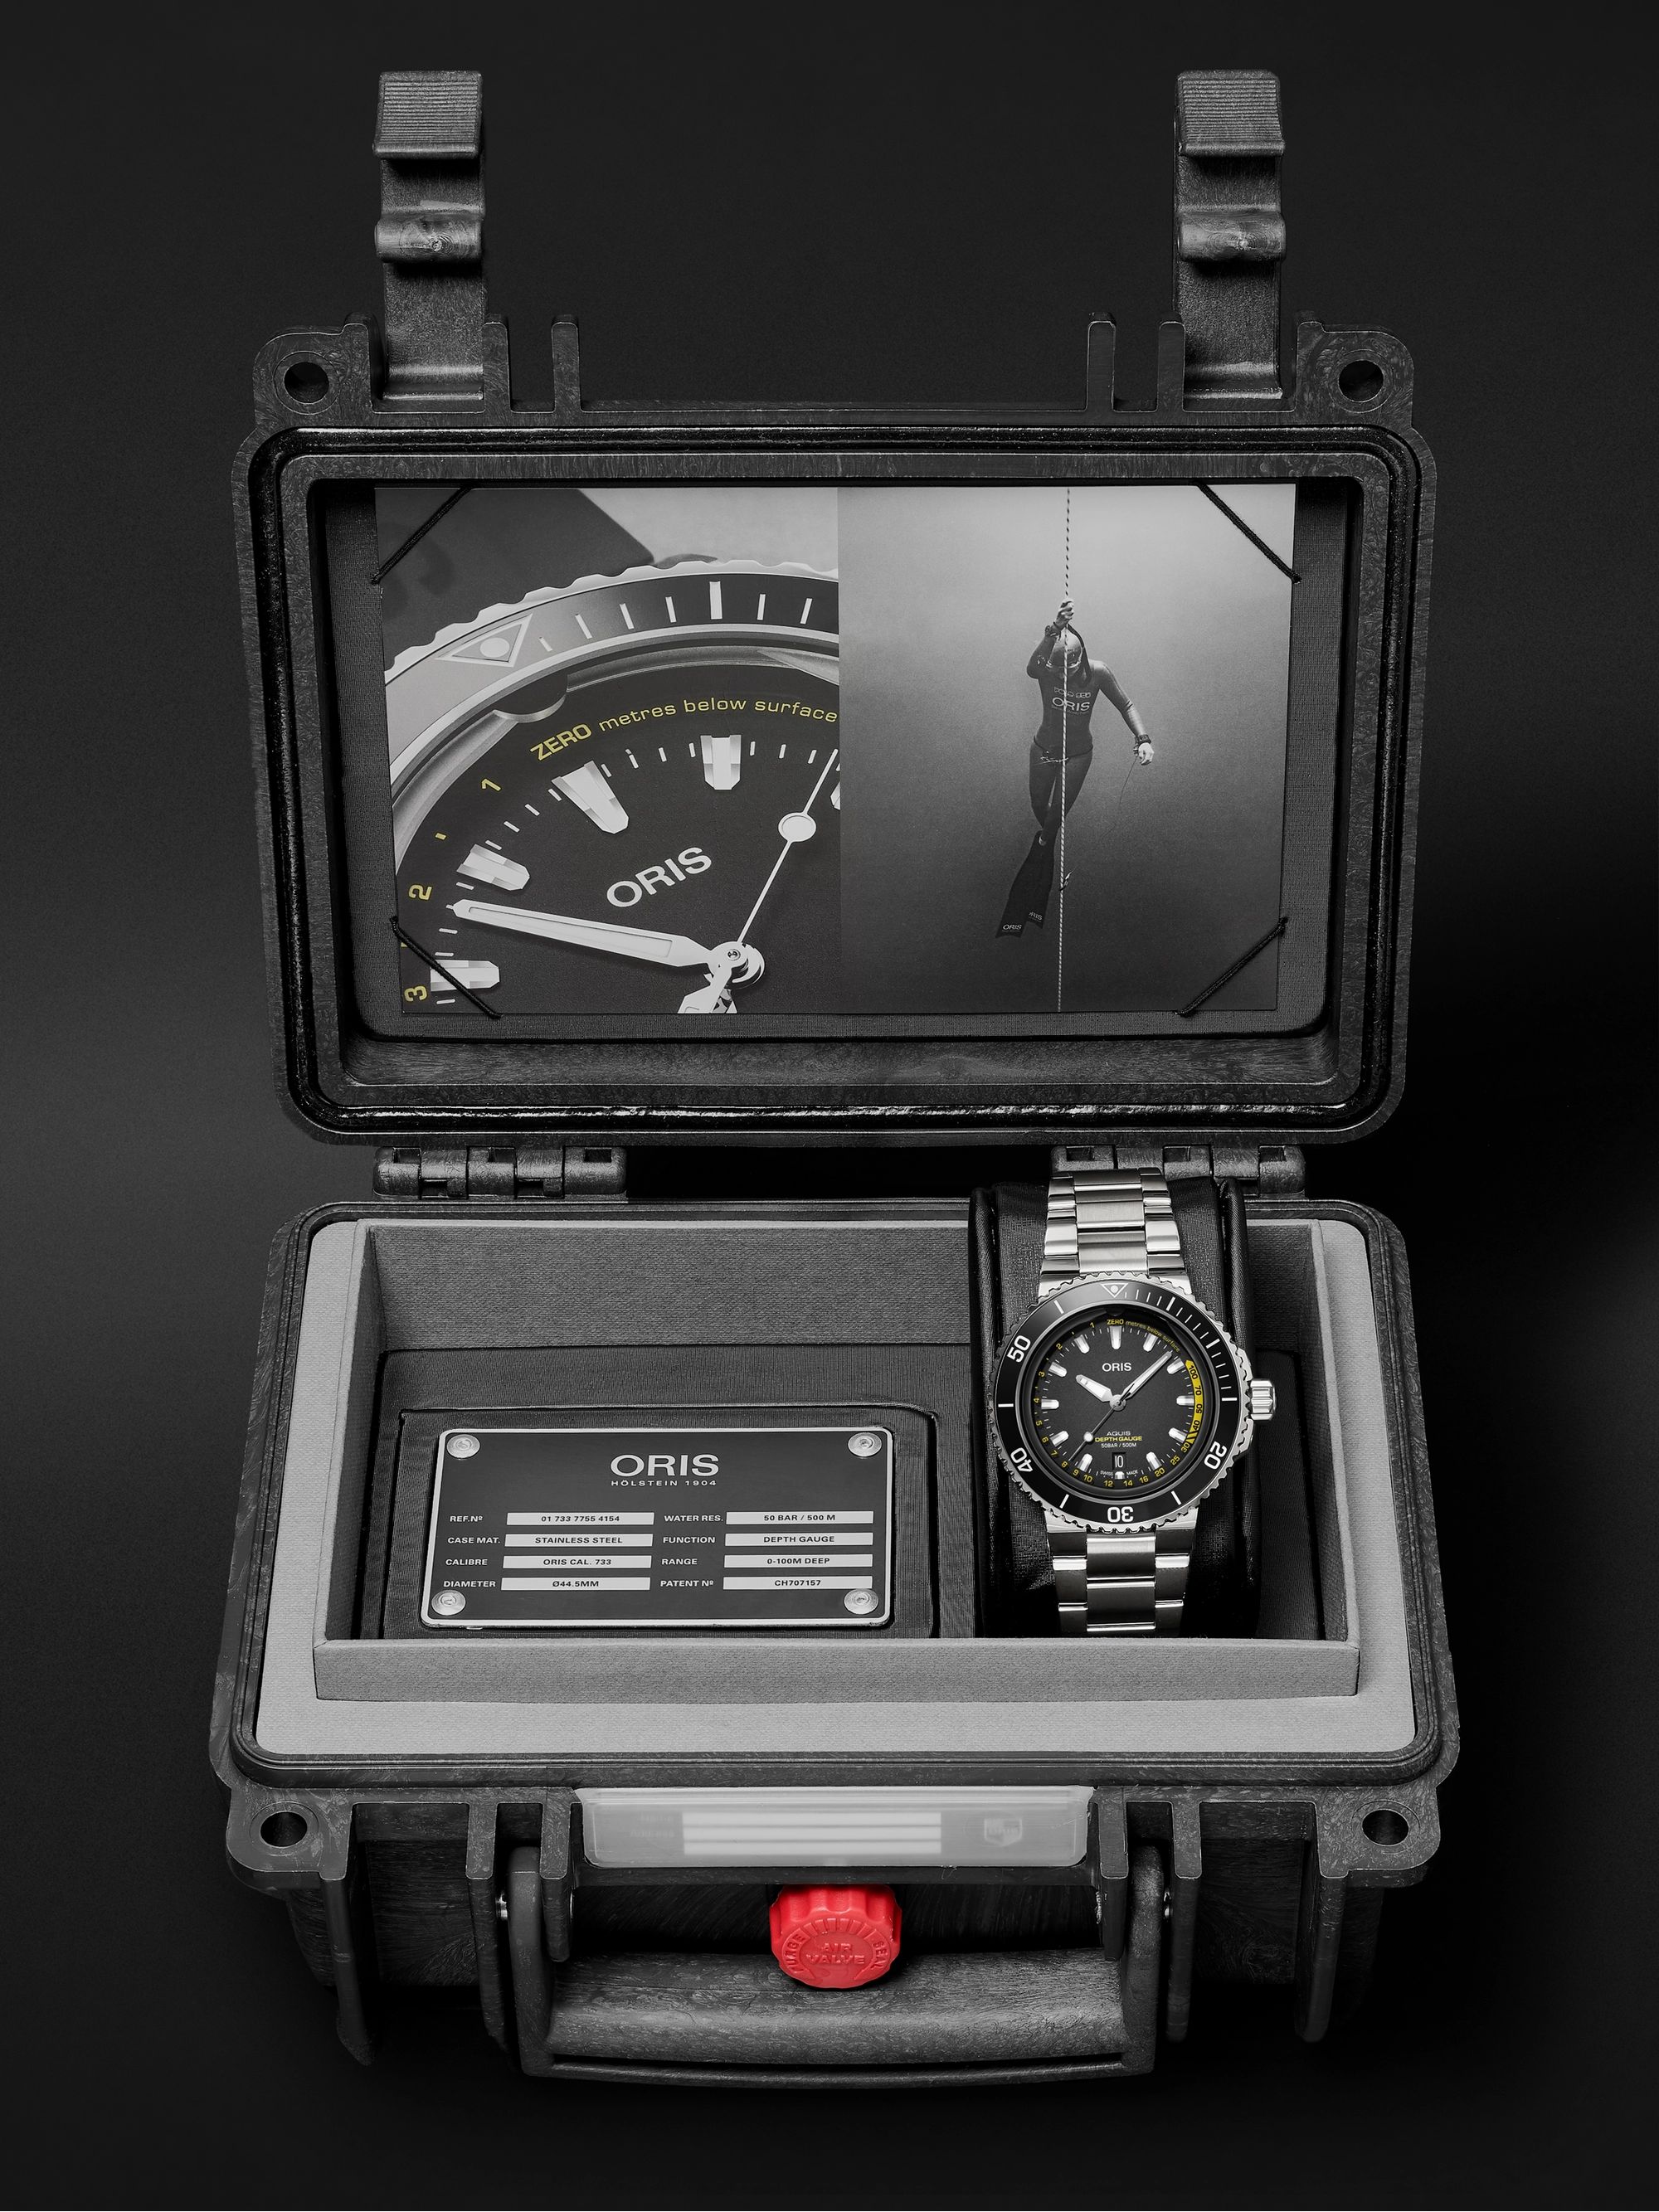 ORIS Aquis Depth Gauge Automatic 45.8mm Stainless Steel Watch, Ref. No. 01 733 7755 4154-Set MB